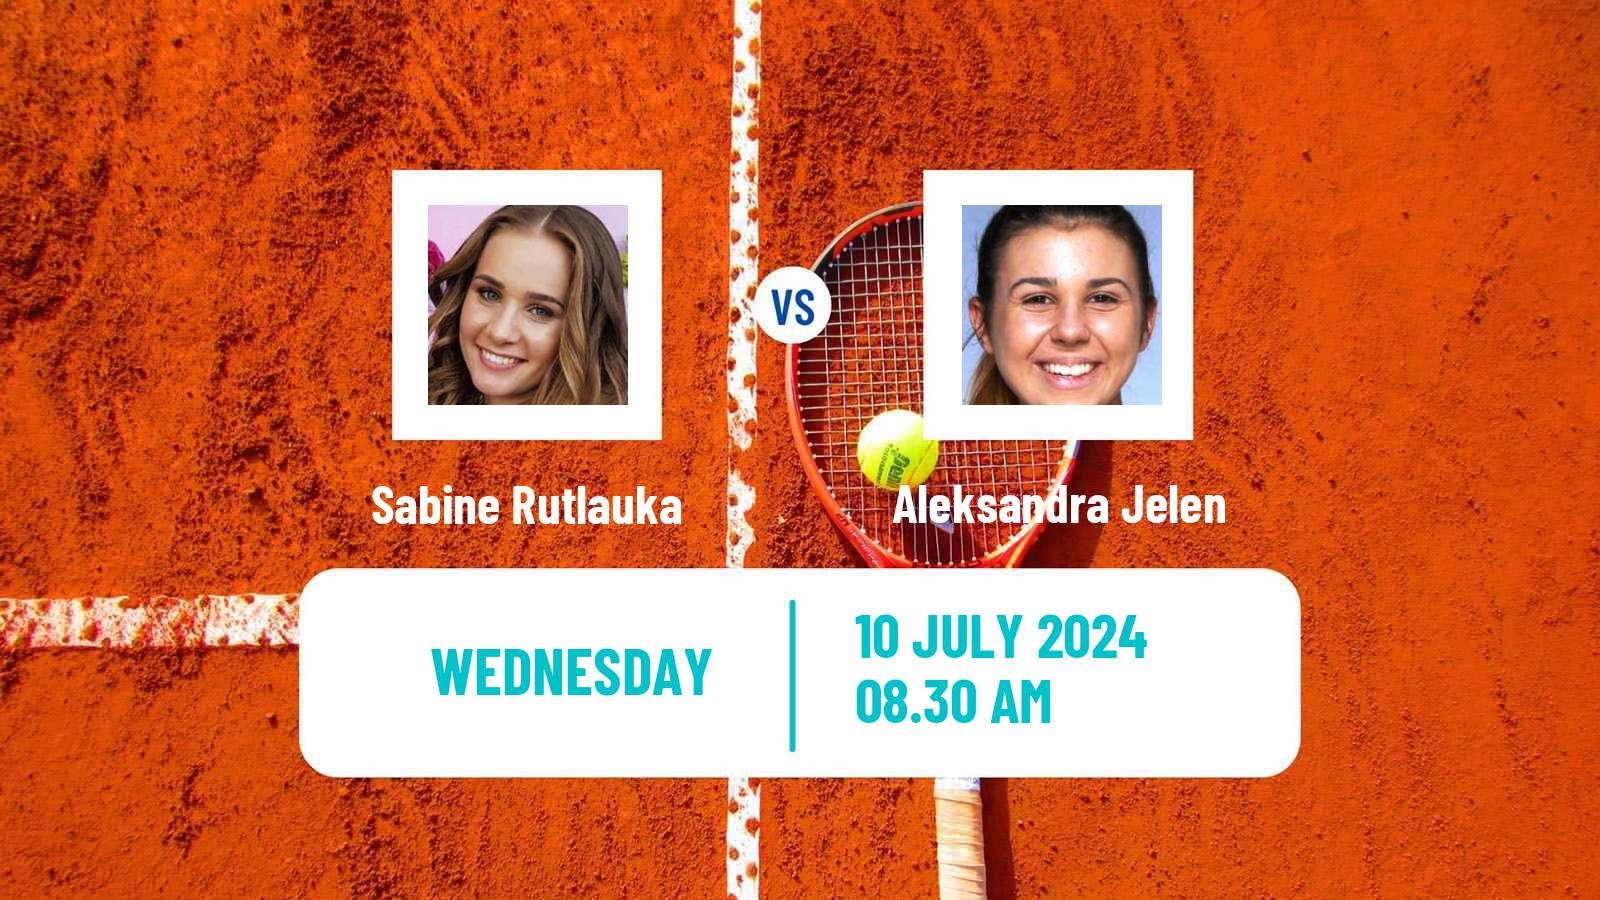 Tennis ITF W15 Grodzisk Mazowiecki Women Sabine Rutlauka - Aleksandra Jelen